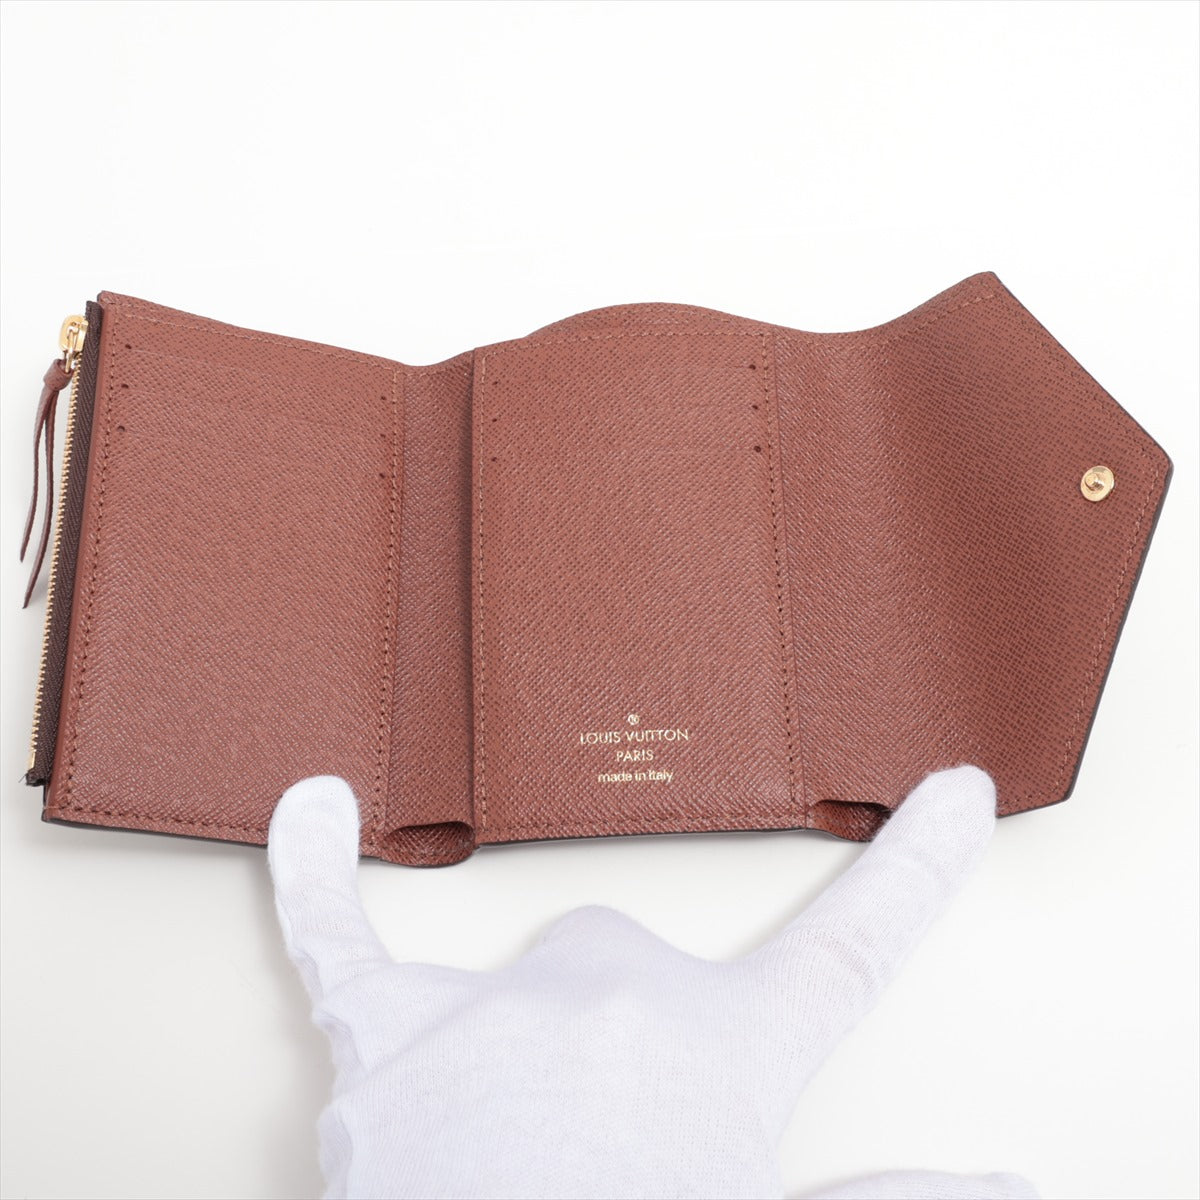 Louis Vuitton Monogram Portefeuille Victorine M62472 Brown Compact Wallet Responsive RFID